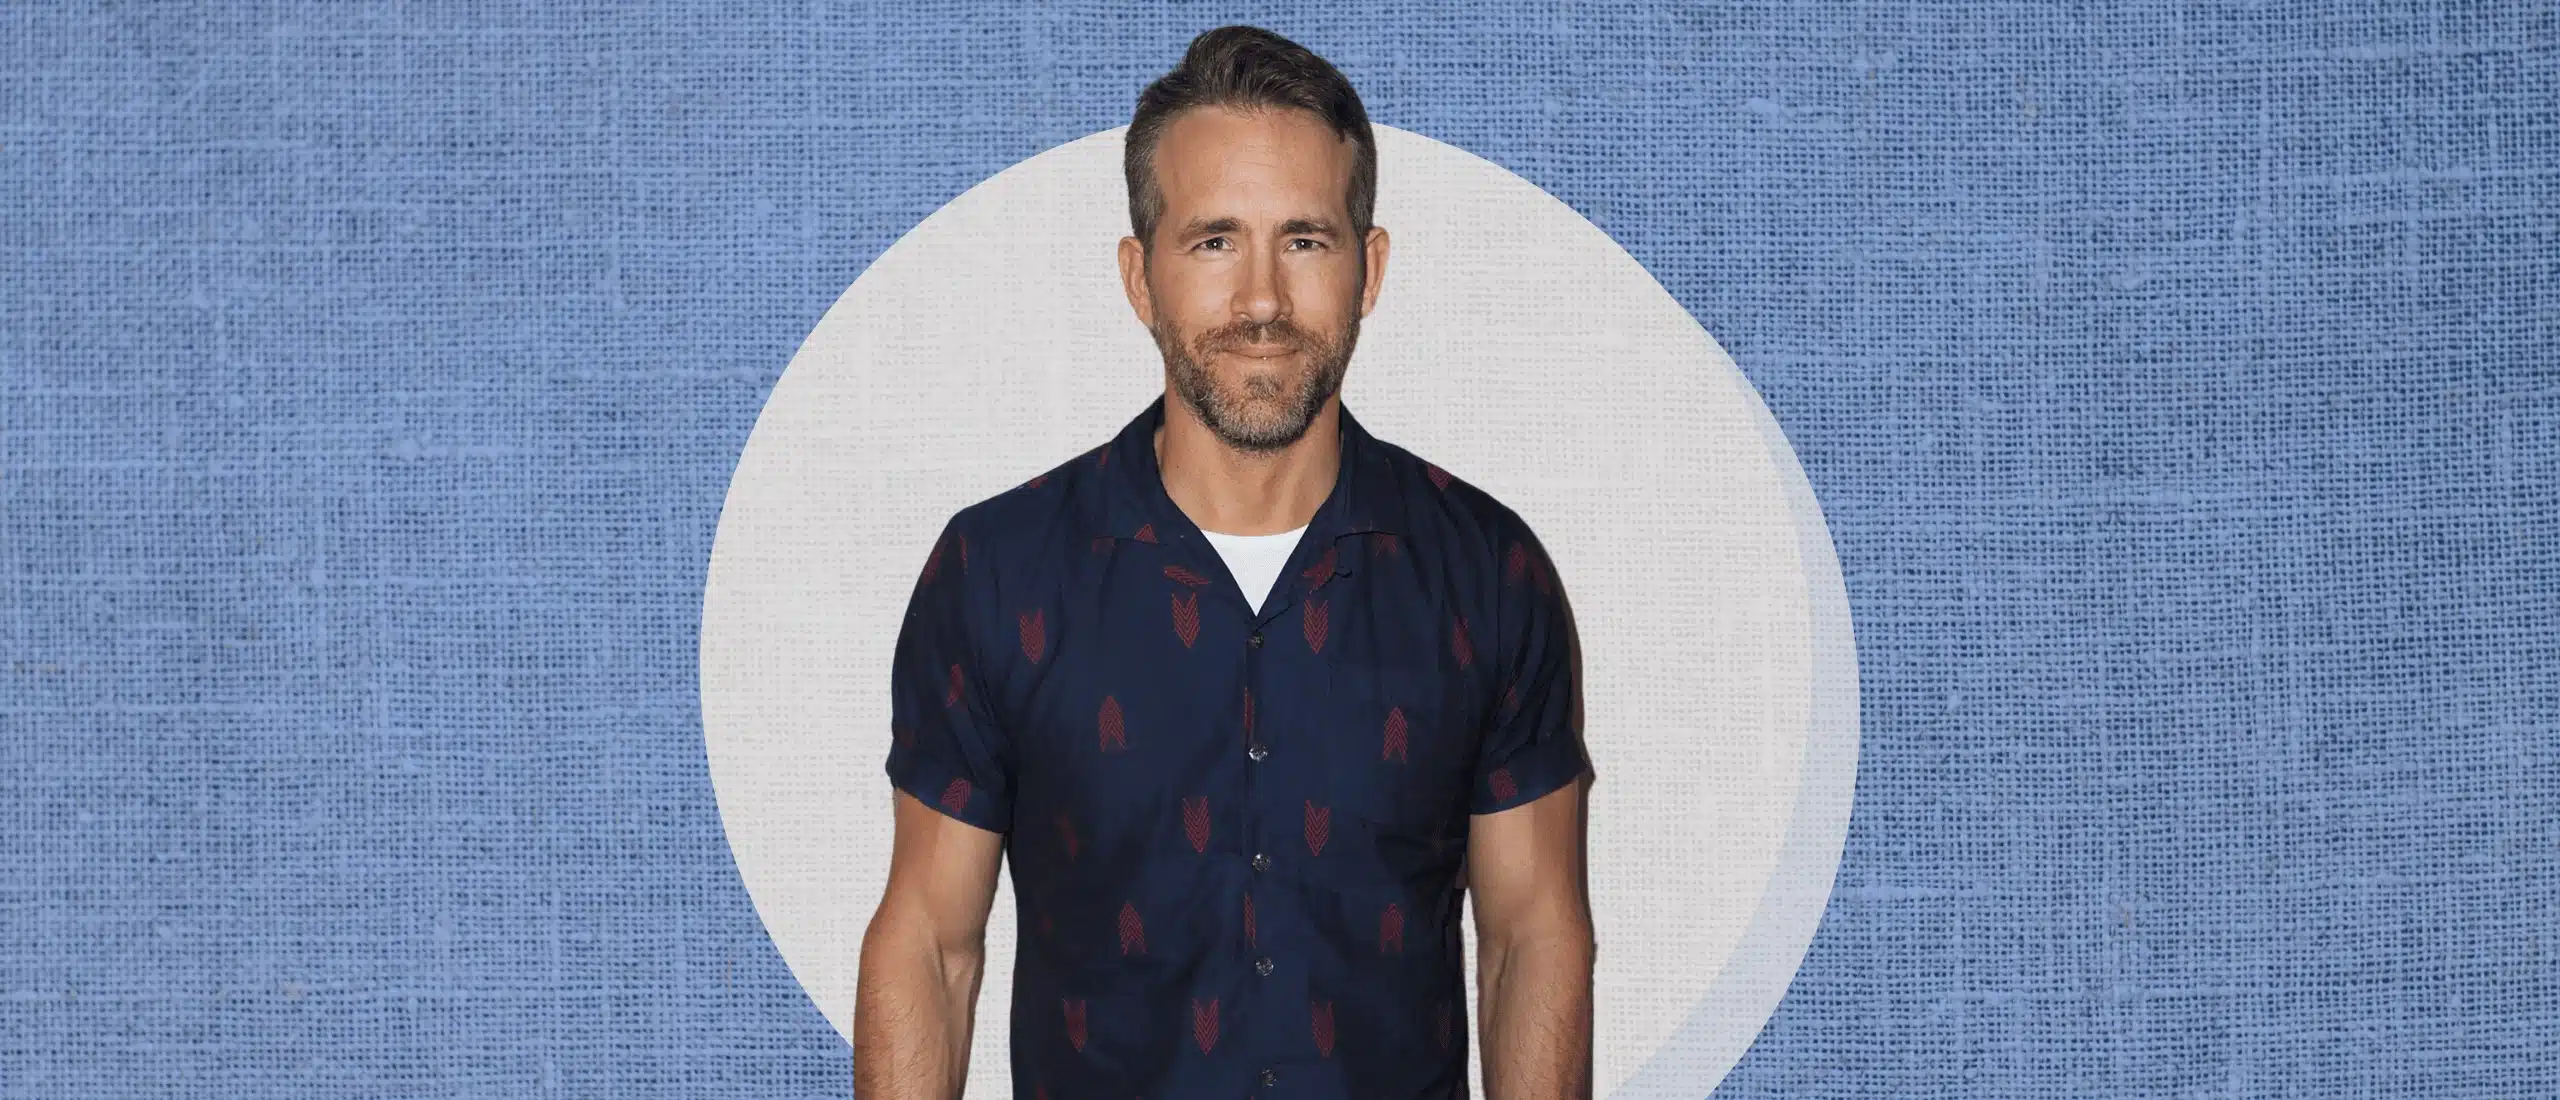 Ryan Reynolds on blue textured background